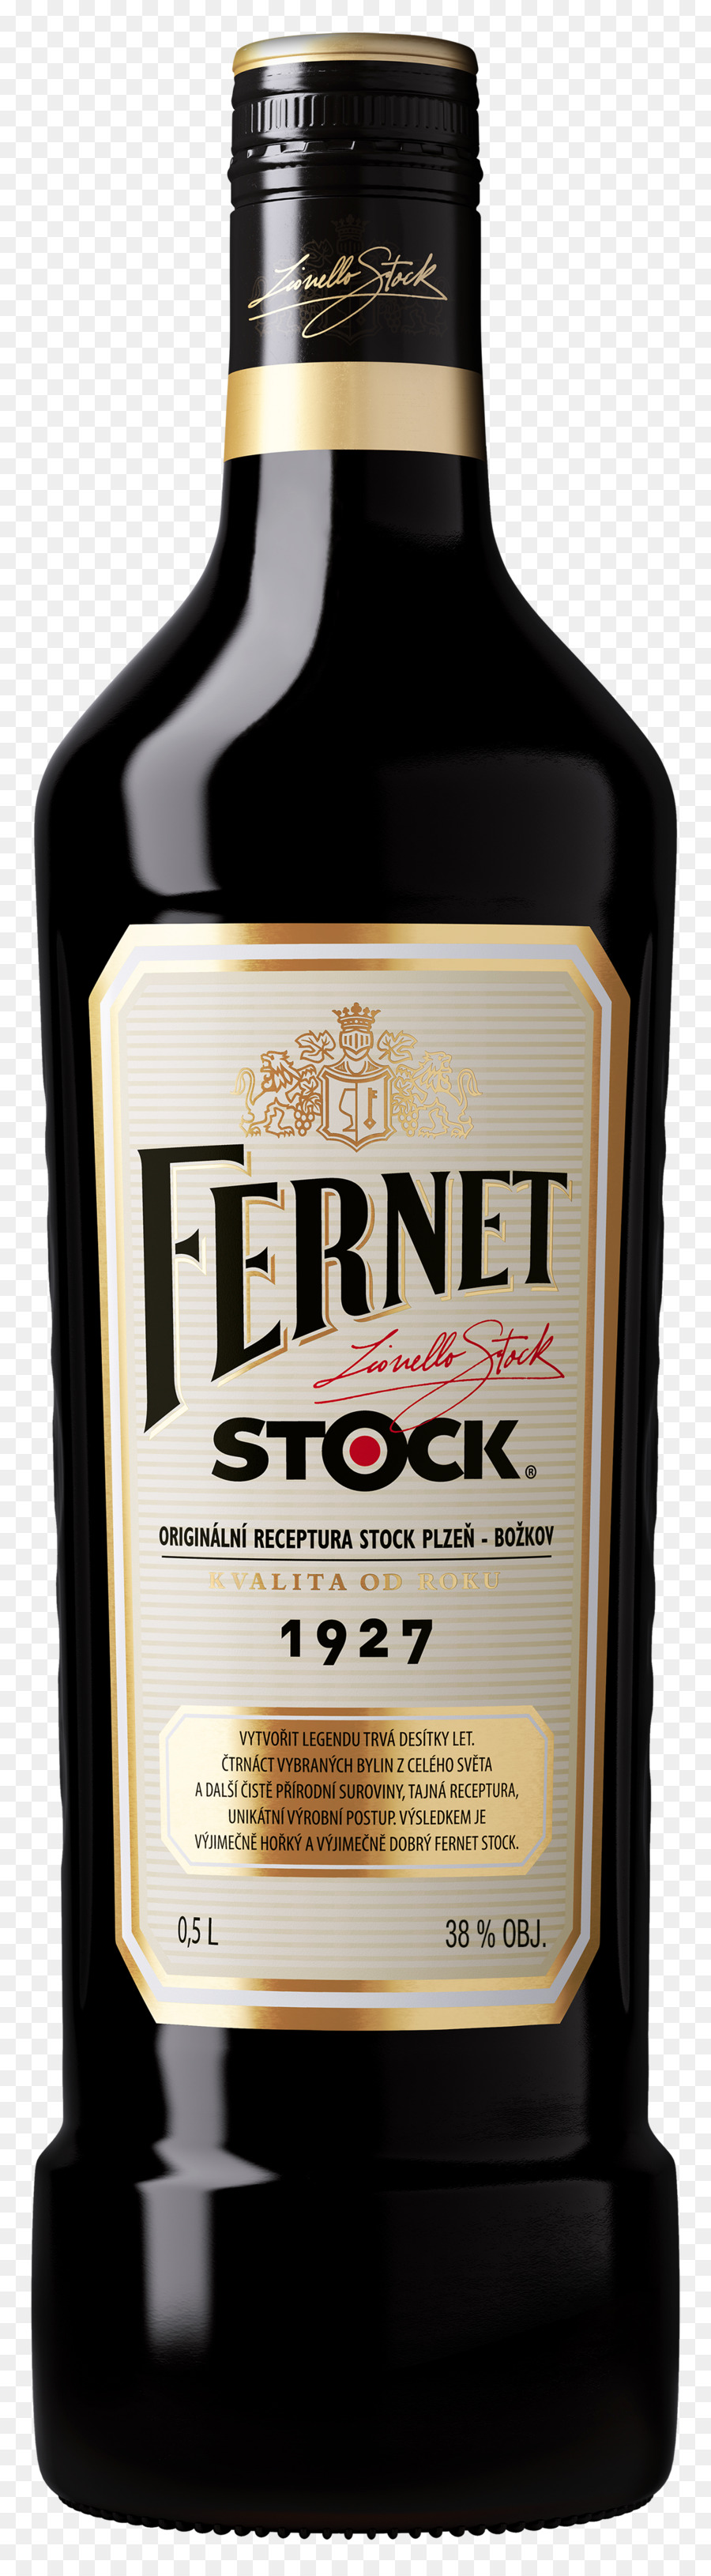 Likör Fernet Stock Destillierte Getränke-Wein - Fernet